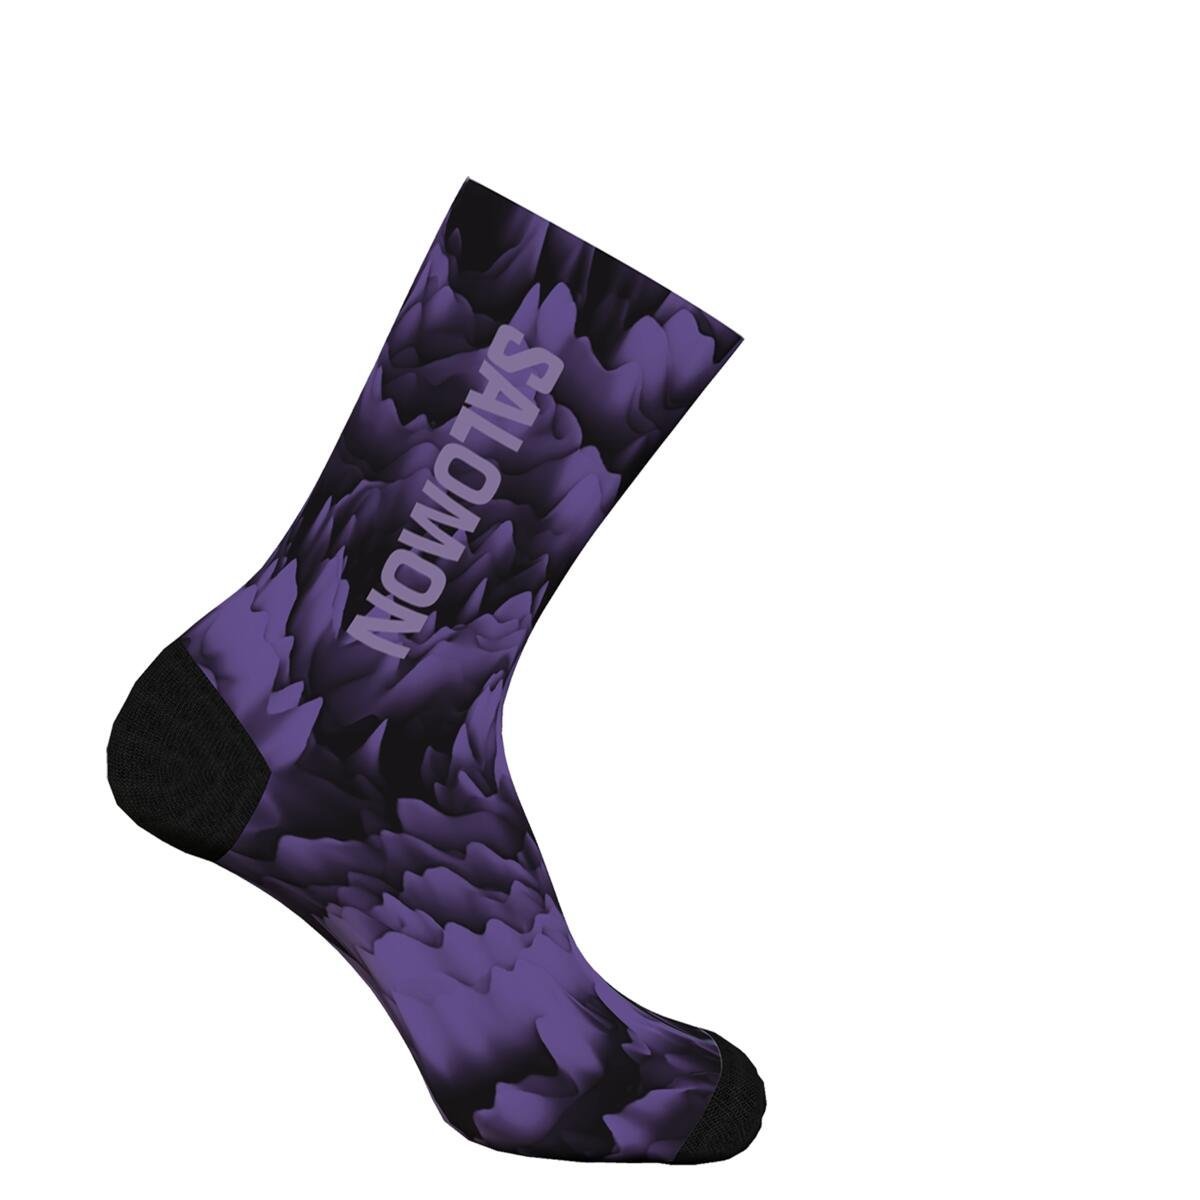 Salomon Creamy Lava Crew ponožky - fialové